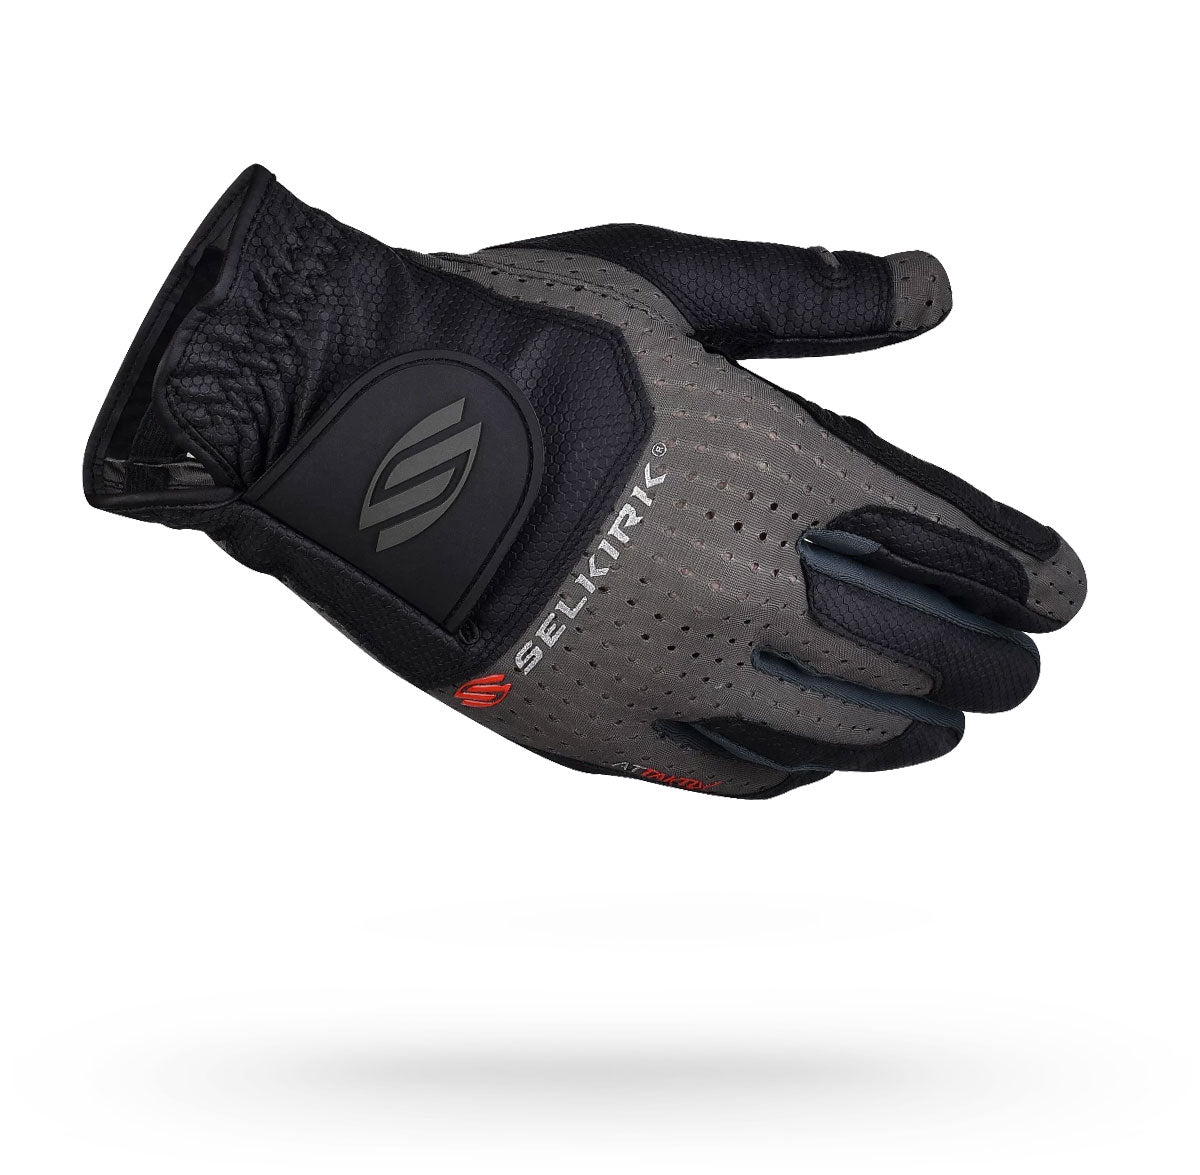 Black-Gray Selkirk Premium Leather Coolskin Upper Glove - Attaktix